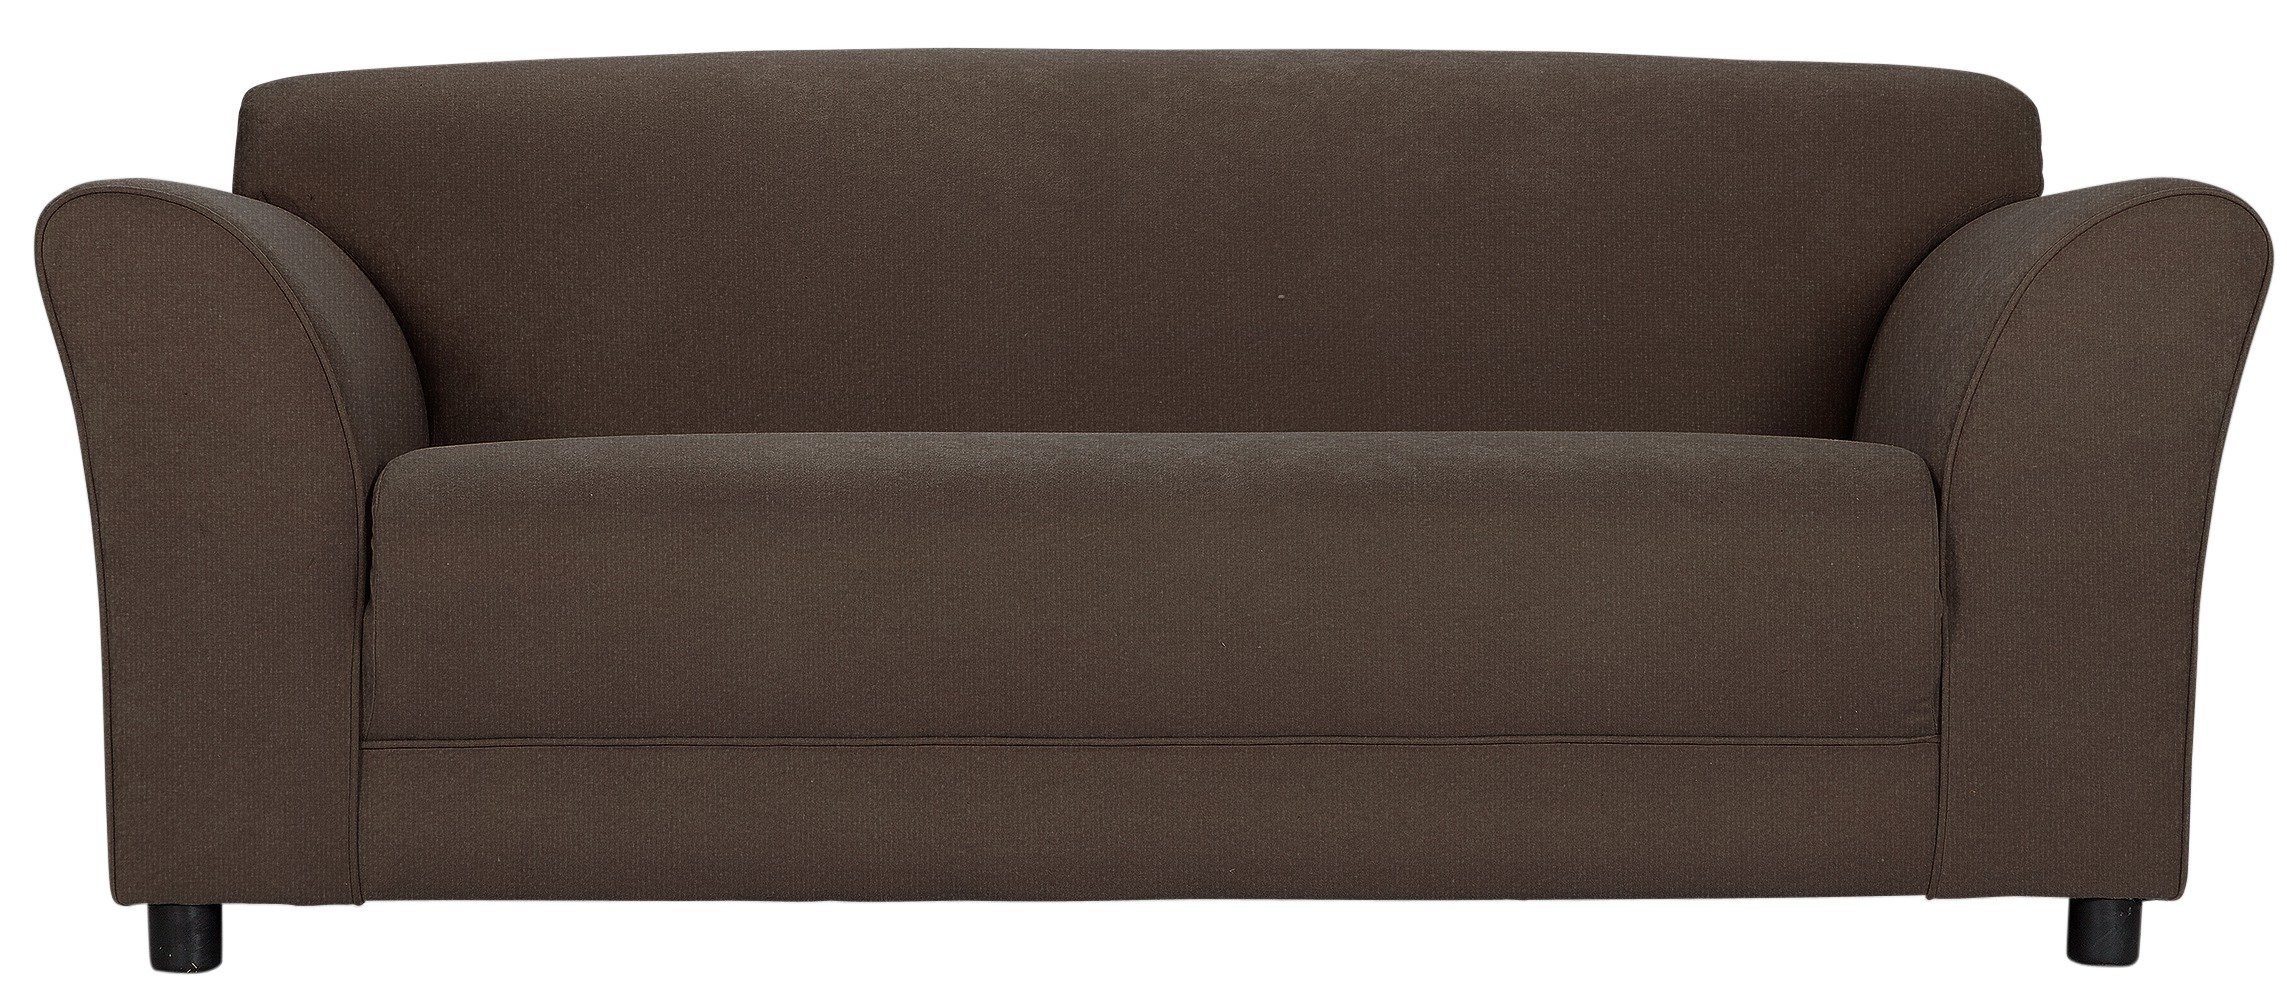 Argos Home Jenna Compact 3 Seater Fabric Sofa - Chocolate